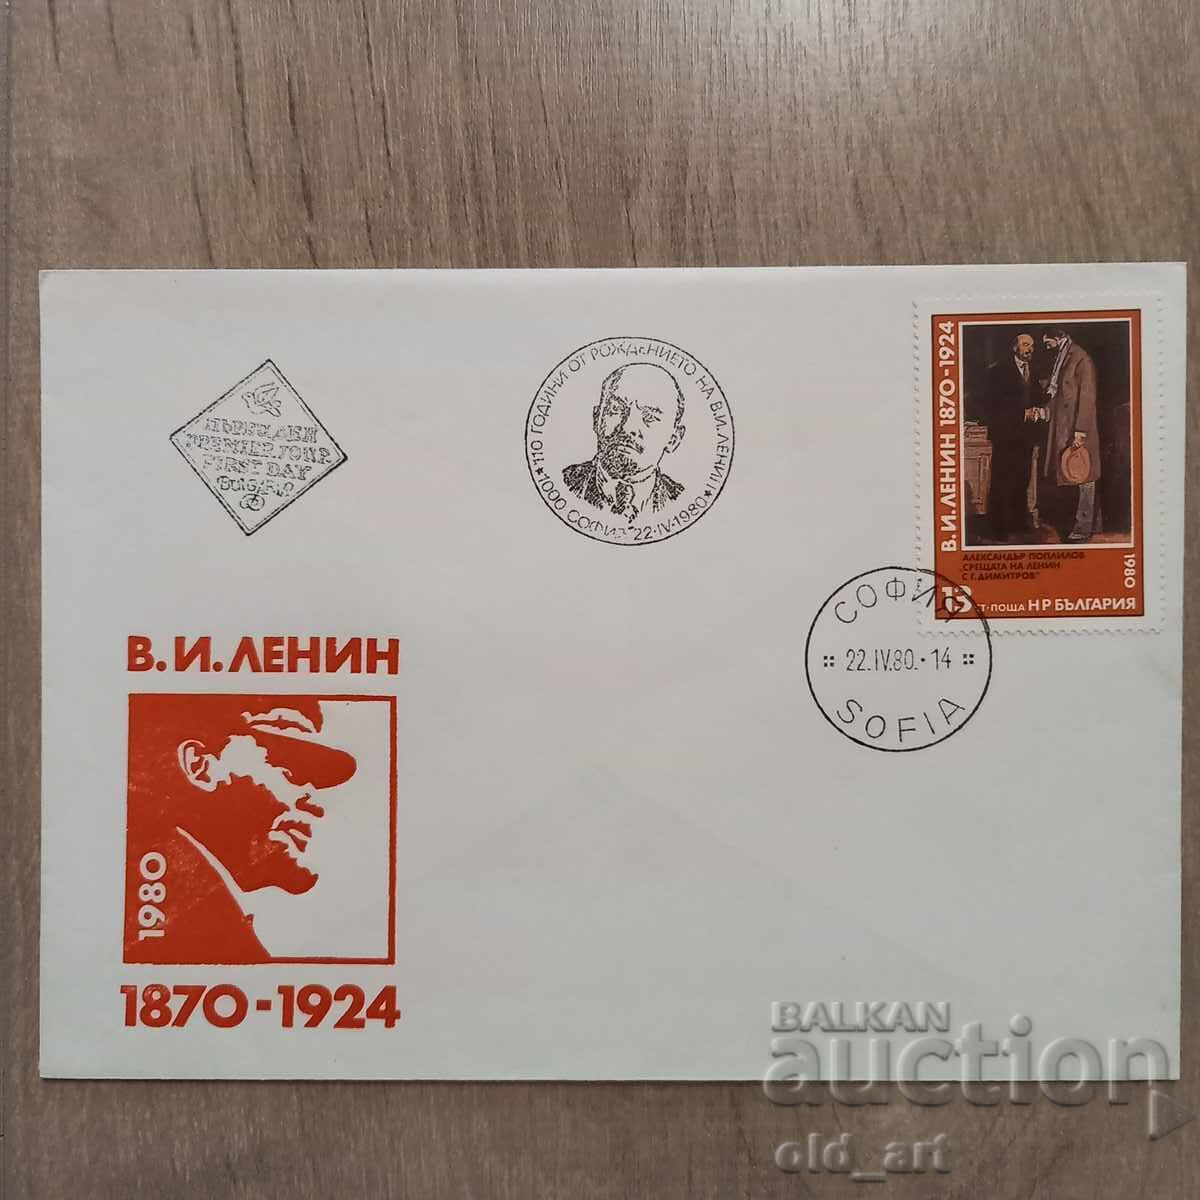 Postal envelope - 110 years since the birth of V.I.Lenin